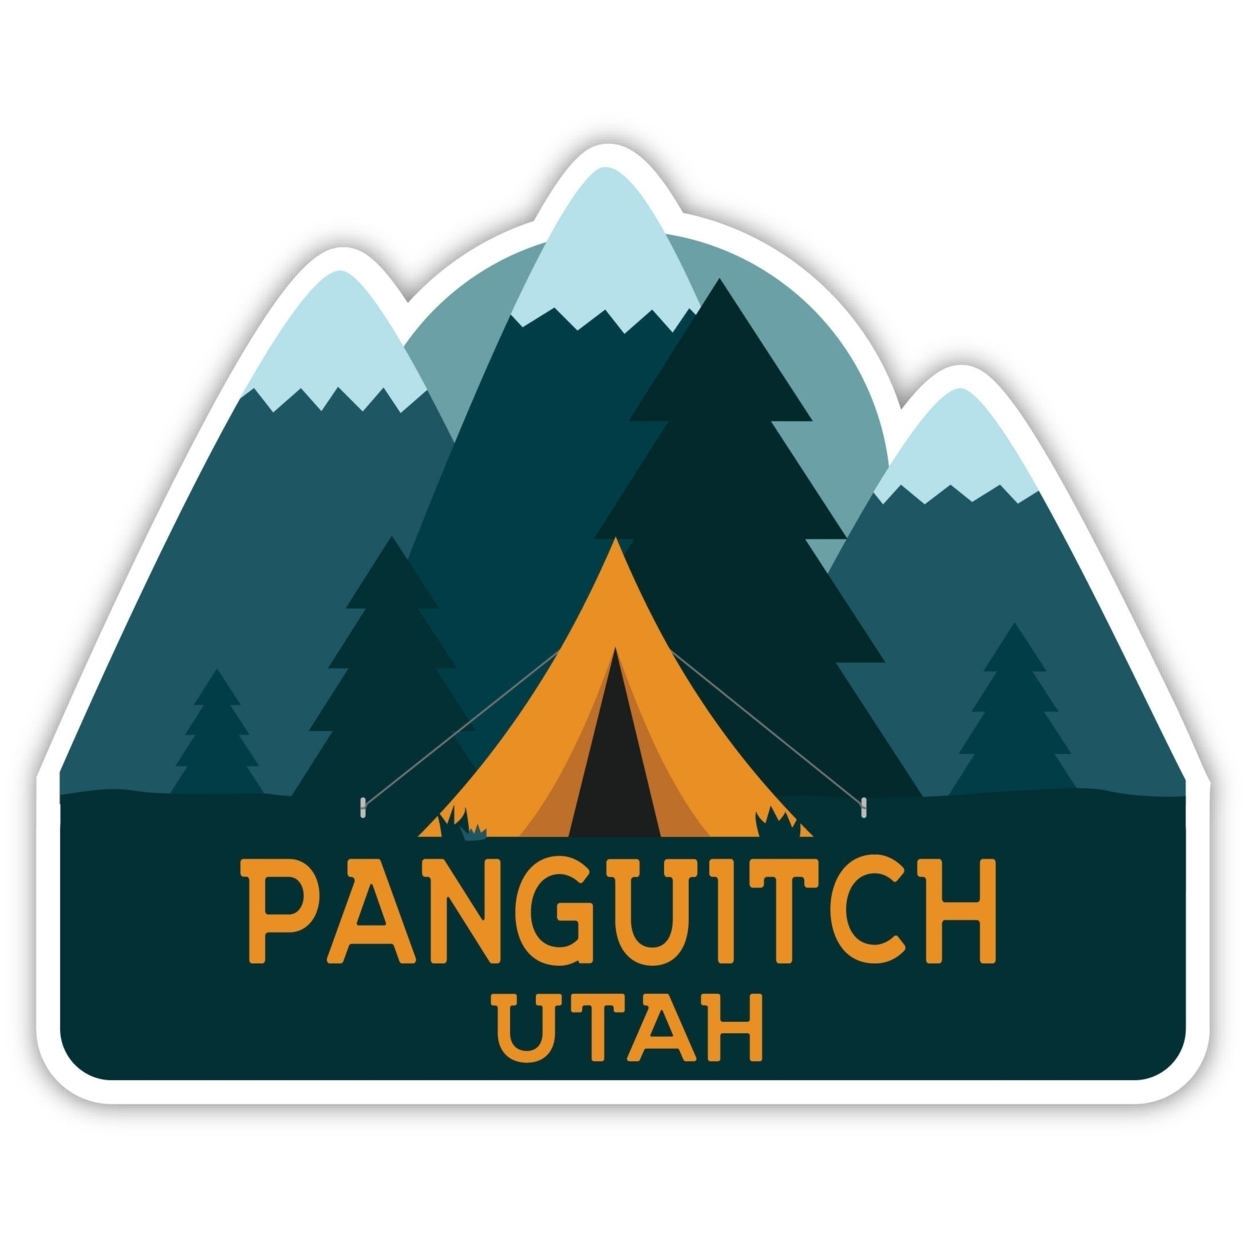 Panguitch Utah Souvenir Decorative Stickers (Choose Theme And Size) - Single Unit, 2-Inch, Camp Life